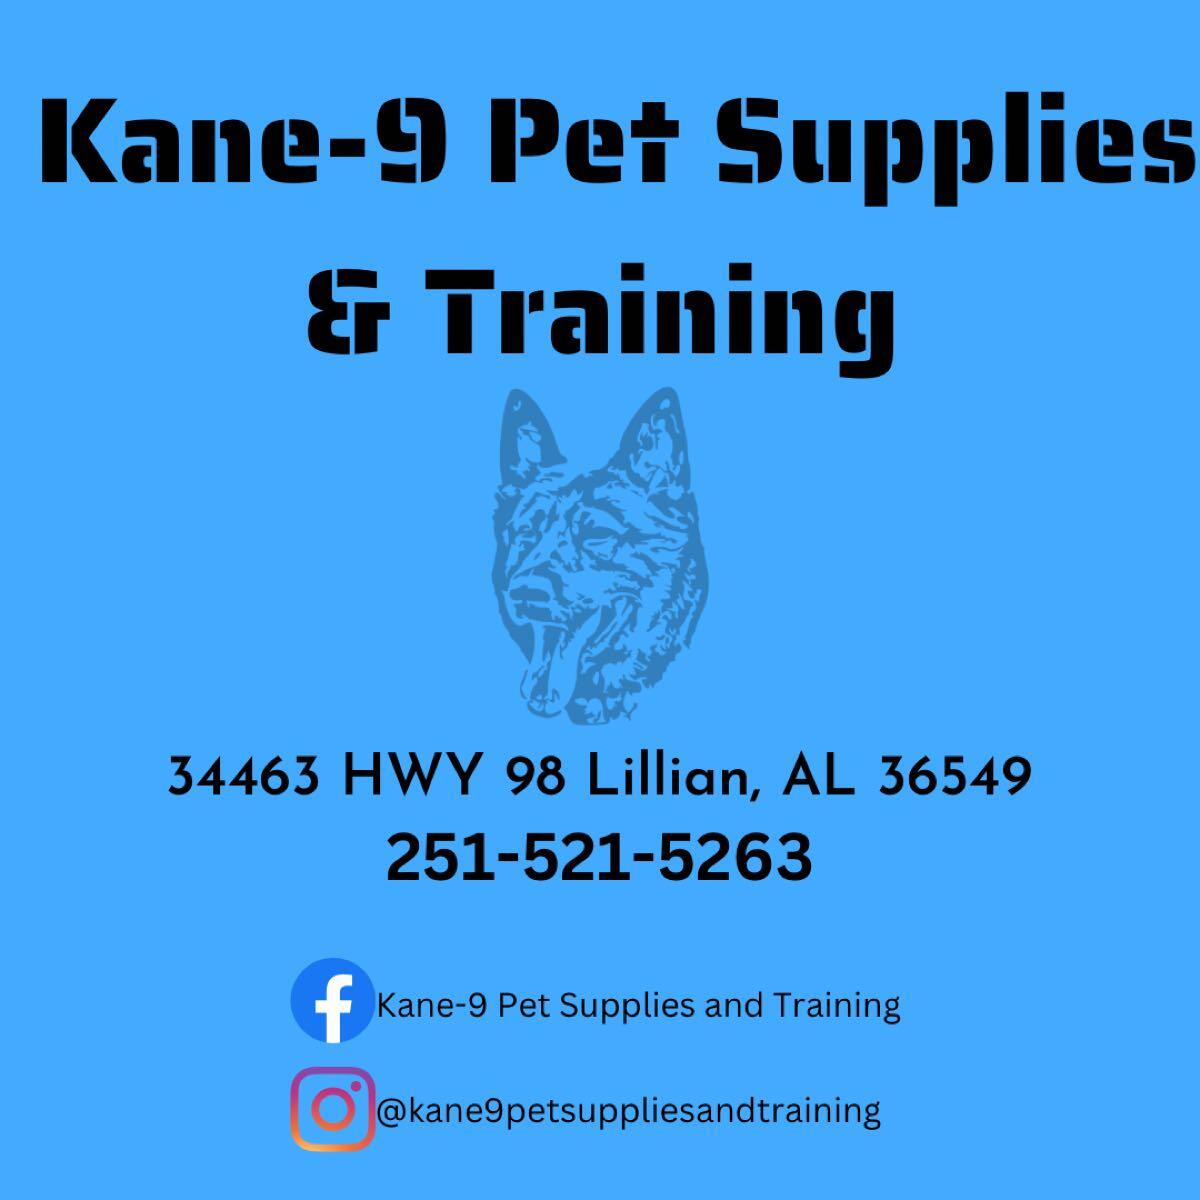 Kane-9 Pet Supplies and Training in Lillian, Alabama